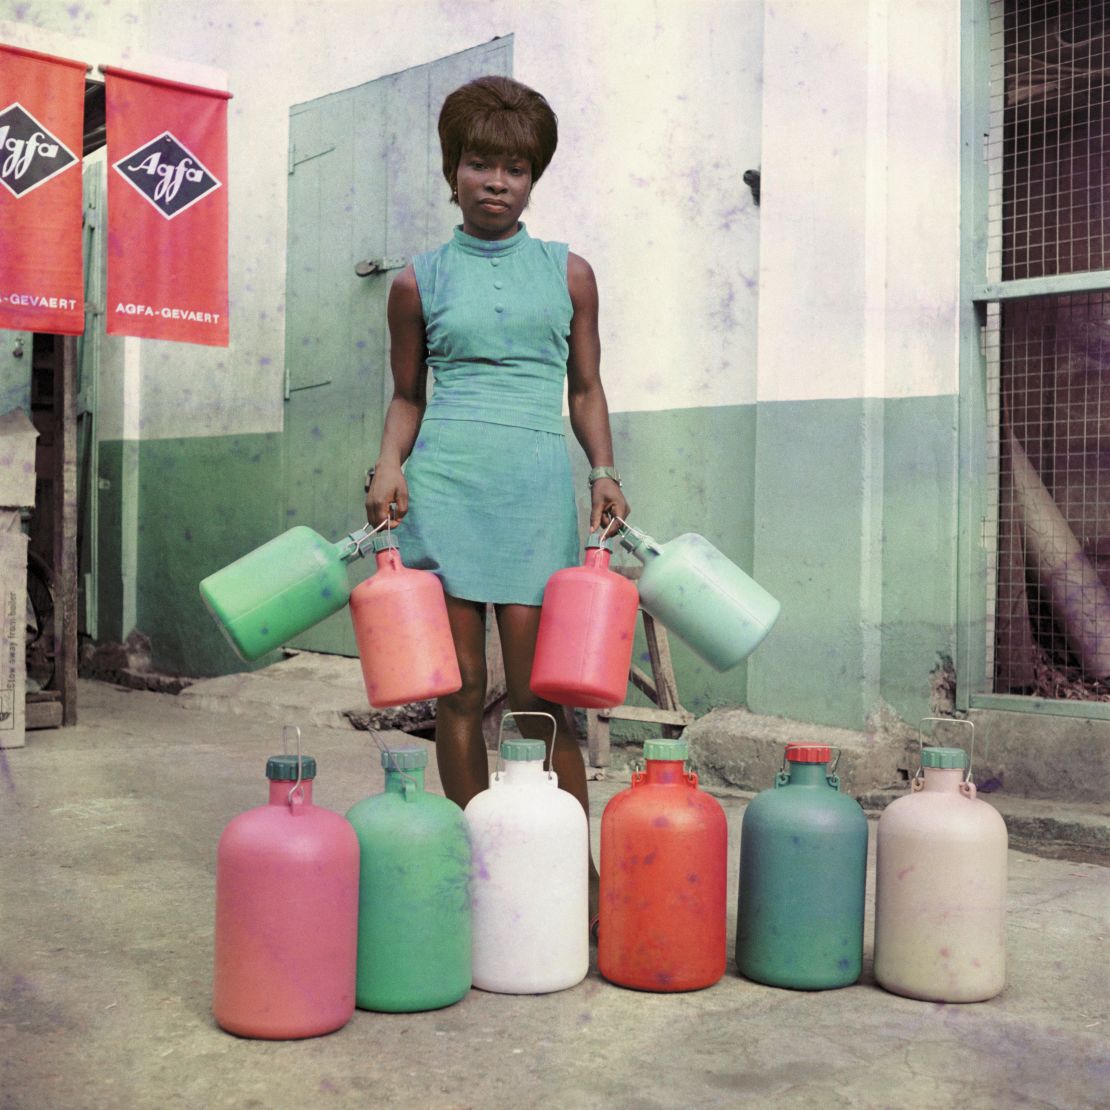 Untitled #4, Sick-Hagemeyer shop assistant, Accra, 1971